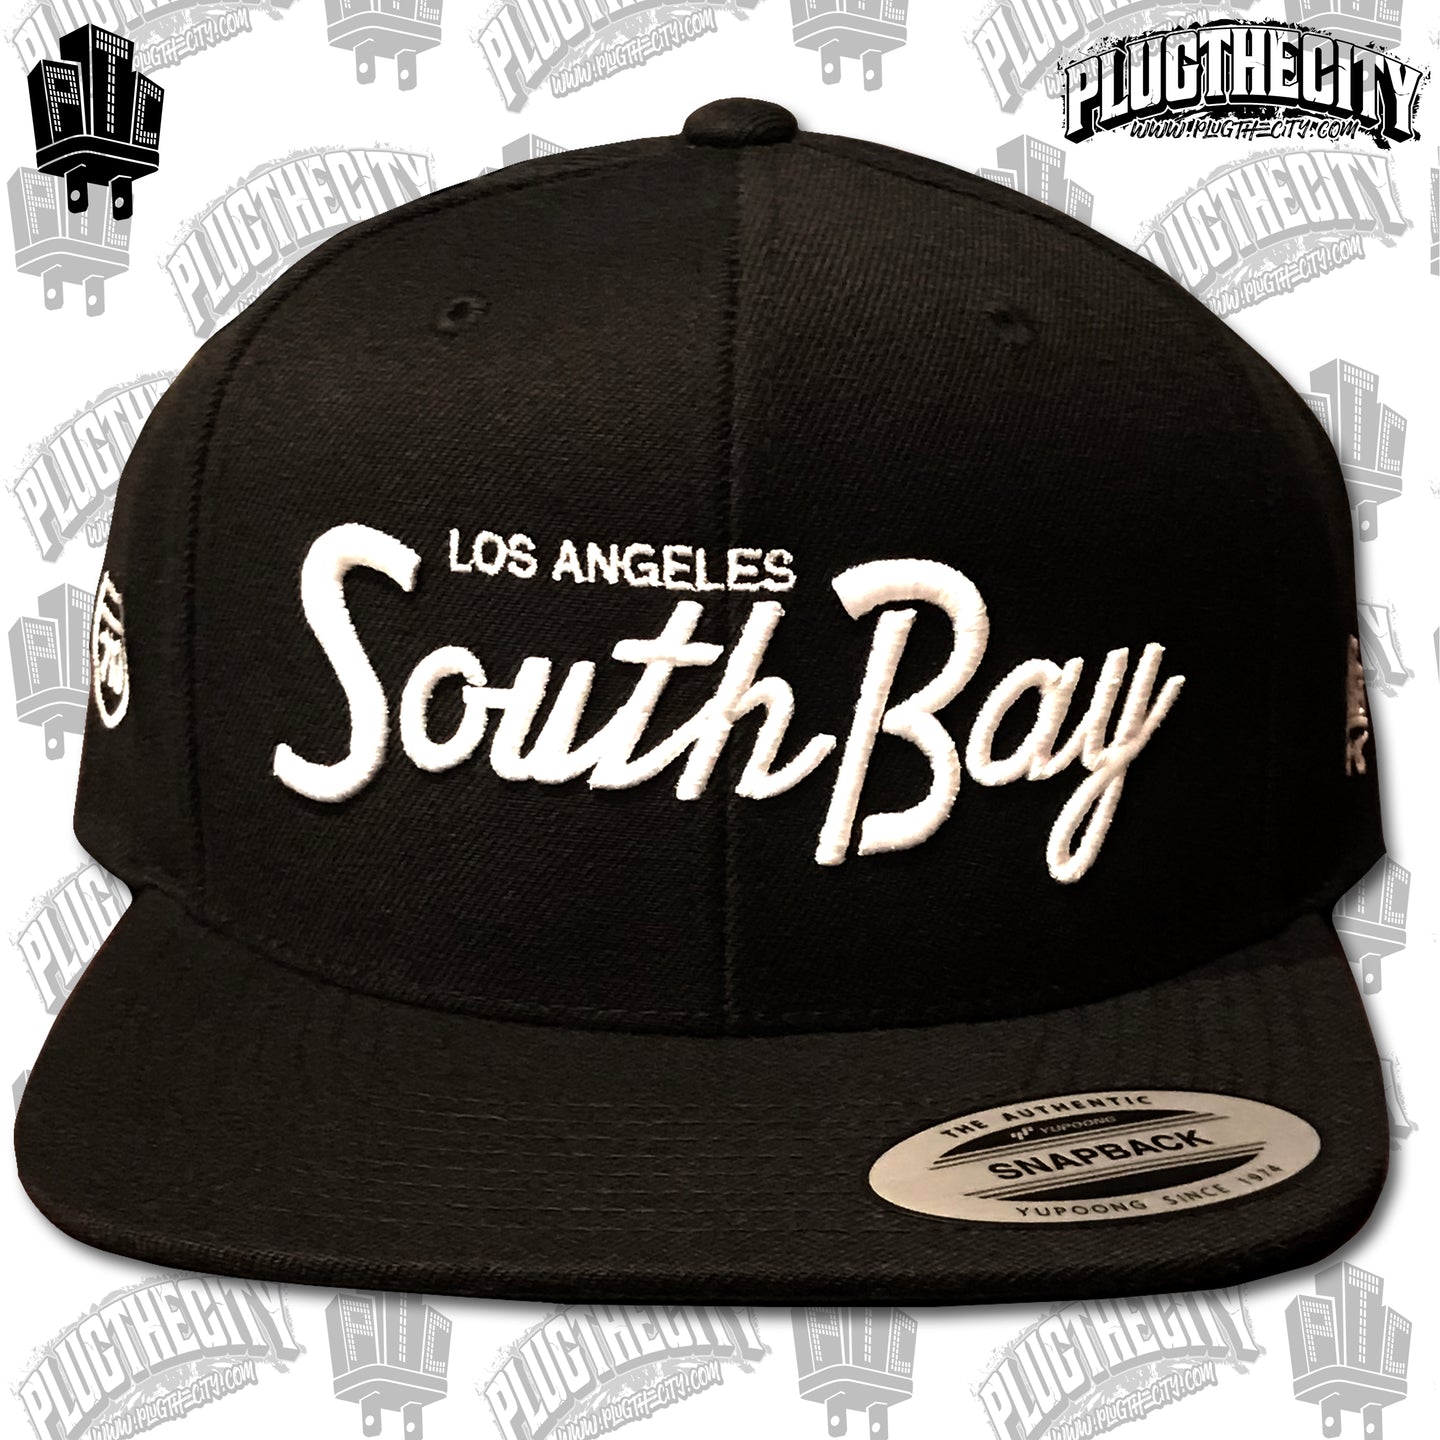 South Bay-Los Angeles-405 & PTC logos on the sides-snapback baseball hat-black